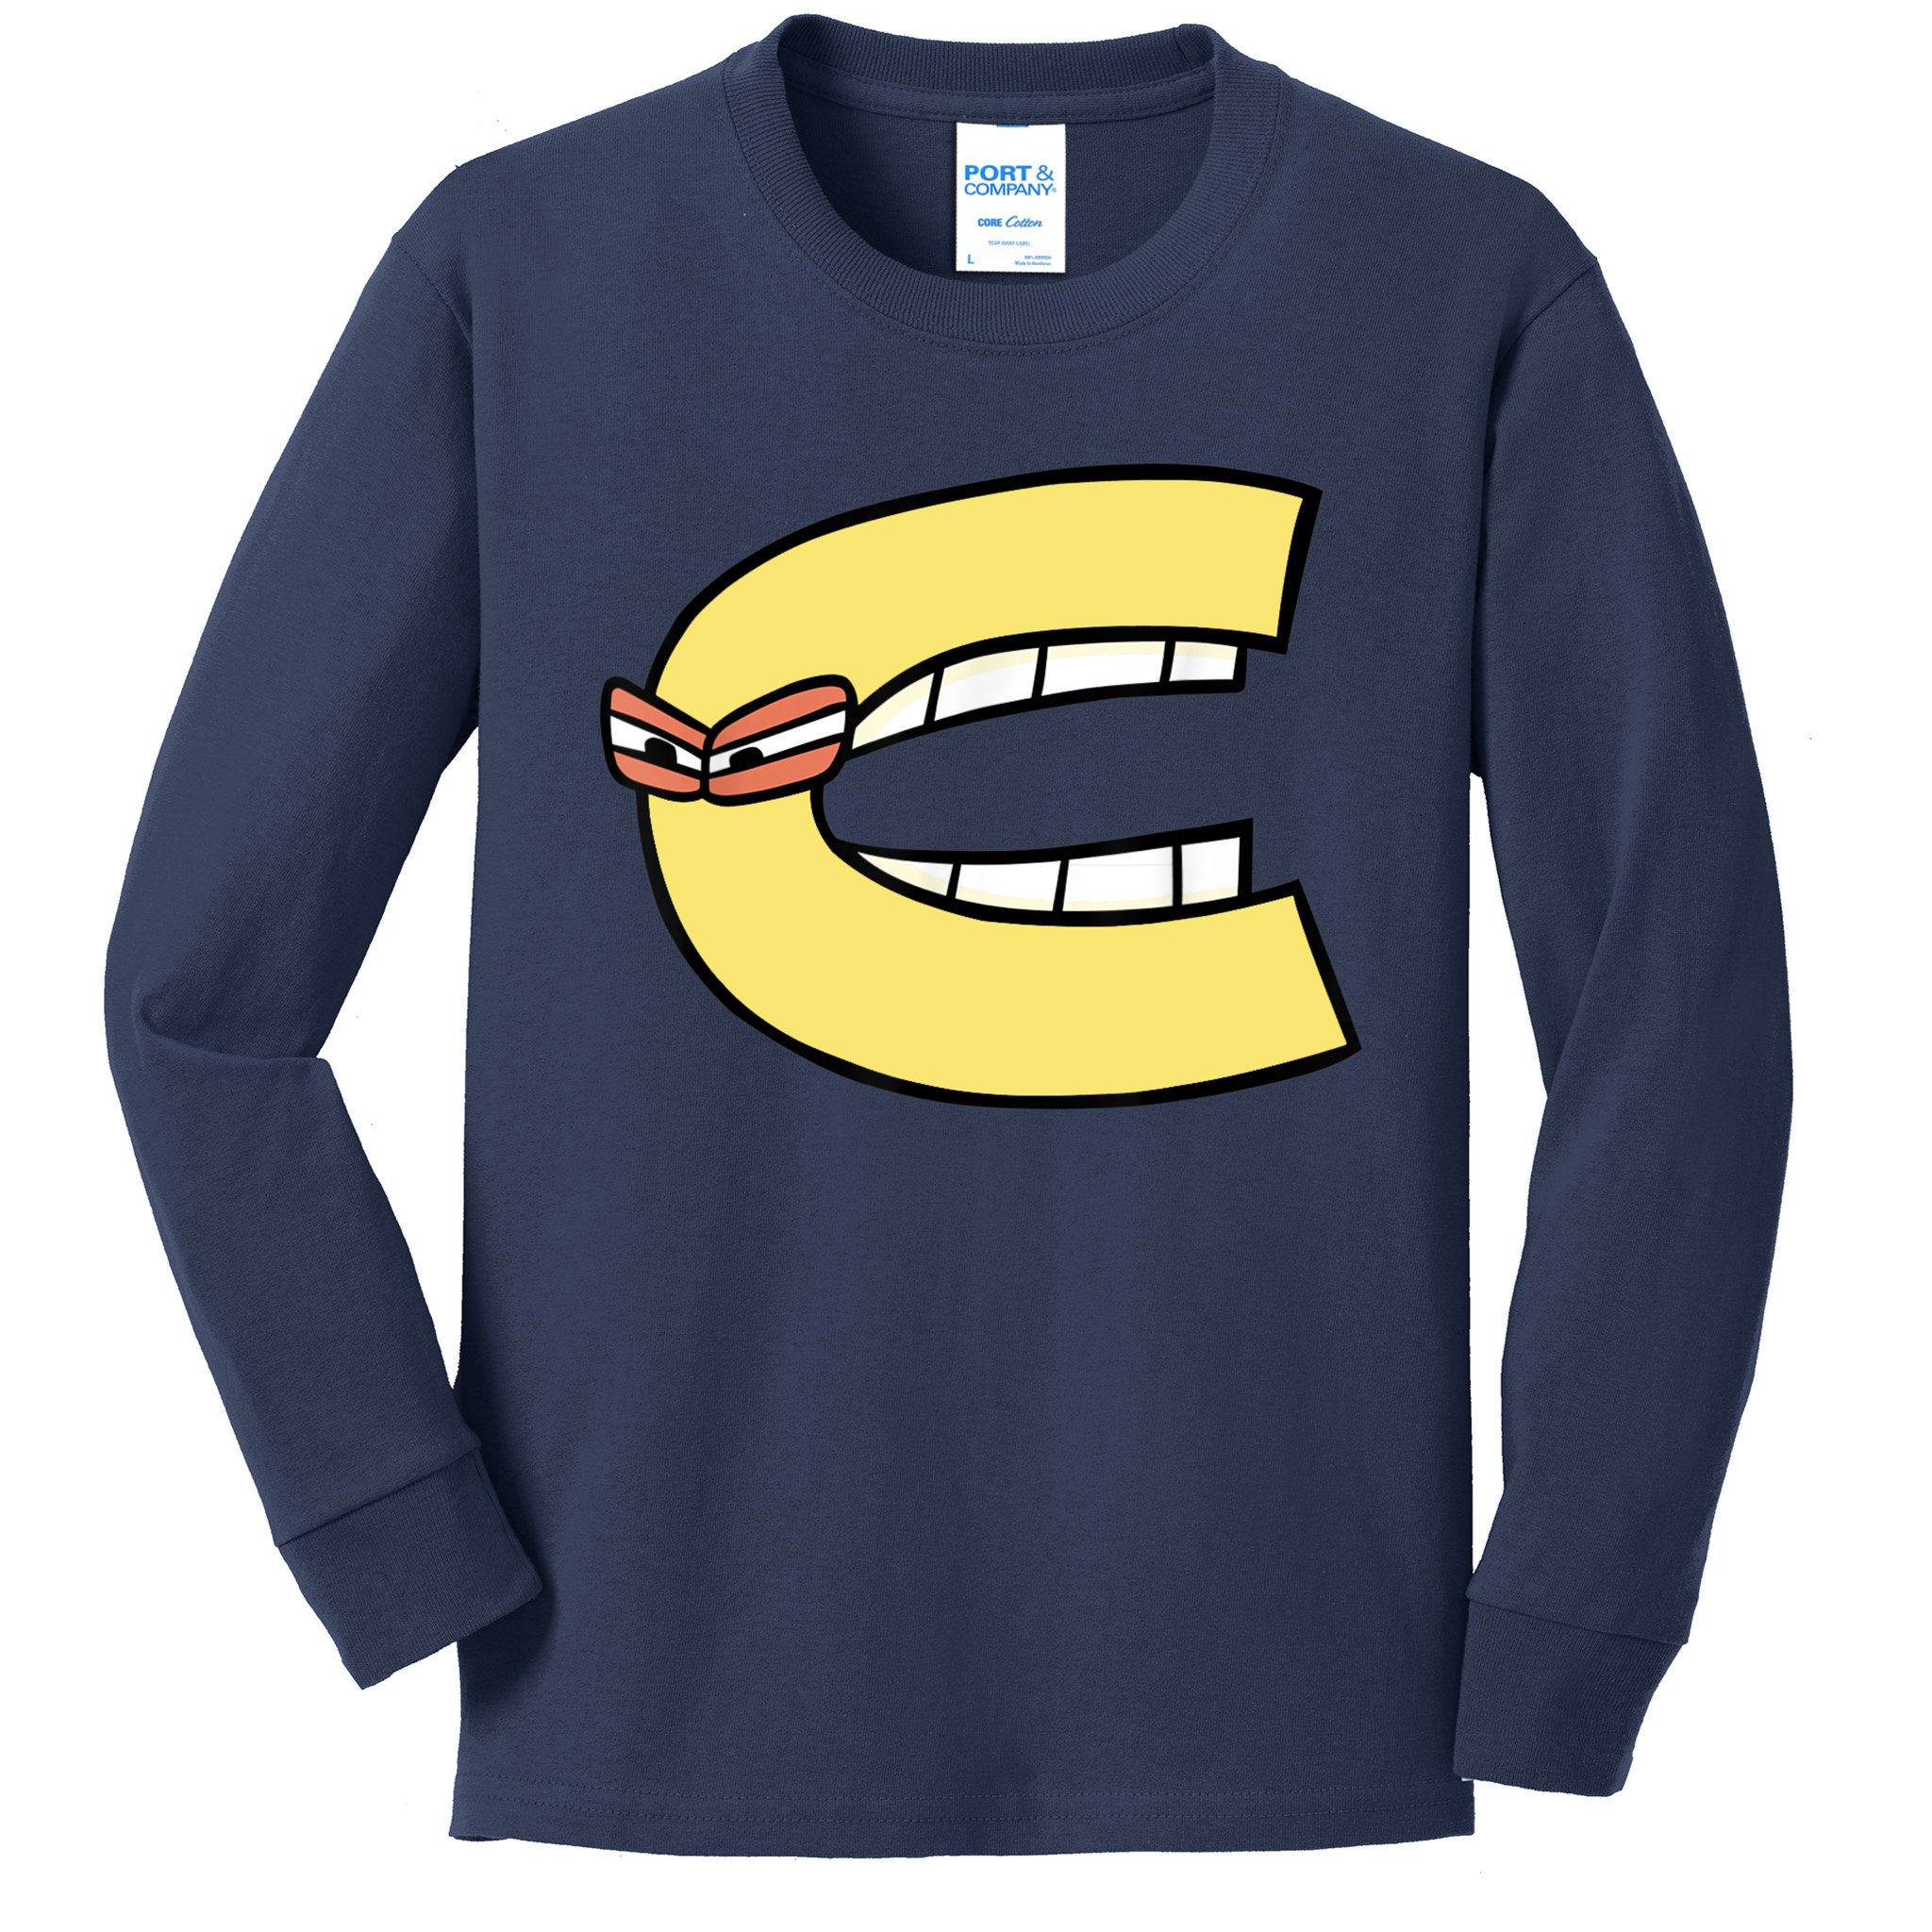 The Angry Latter C Alphabet Lore Unisex T-Shirt